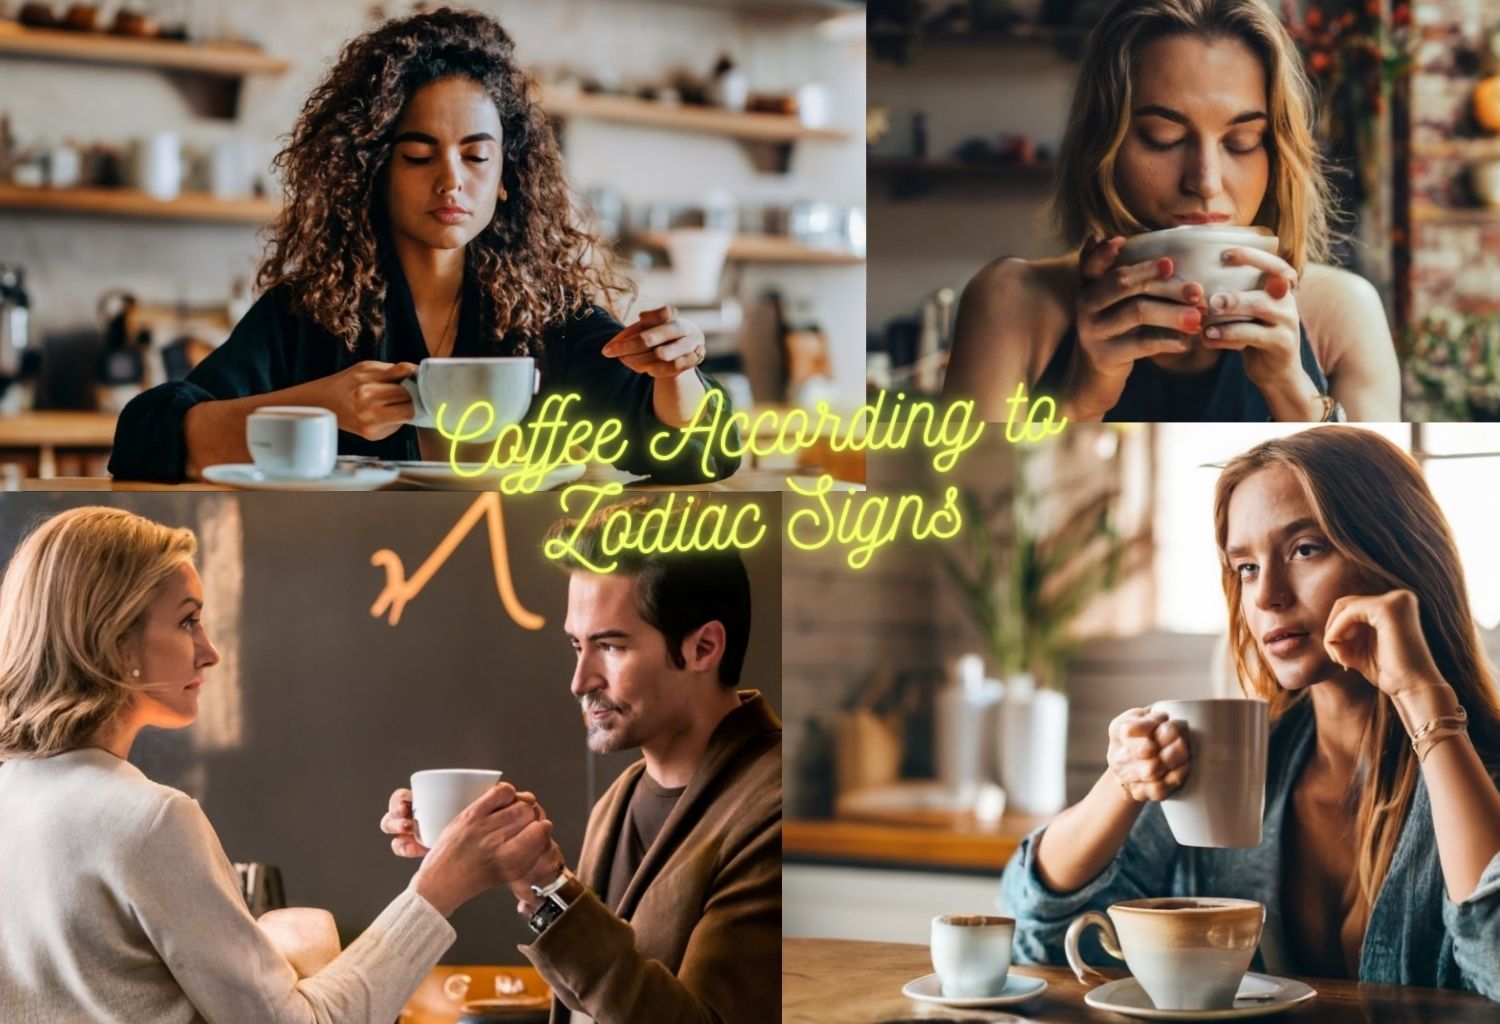 Coffee According to Zodiac Signs